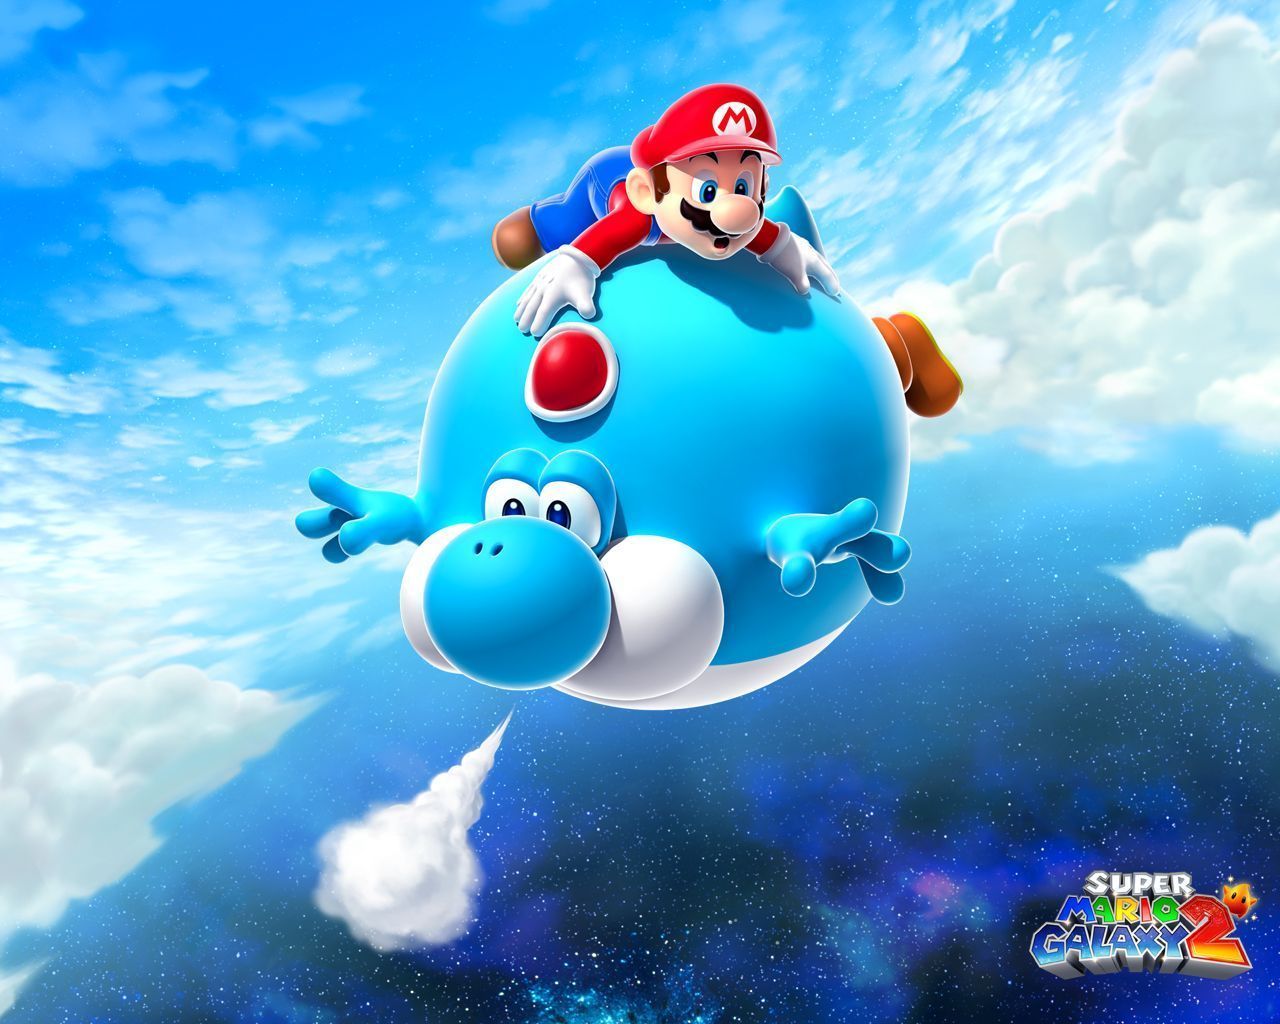 TMK | Downloads | Images | Wallpaper | Super Mario Galaxy 2 (Wii)